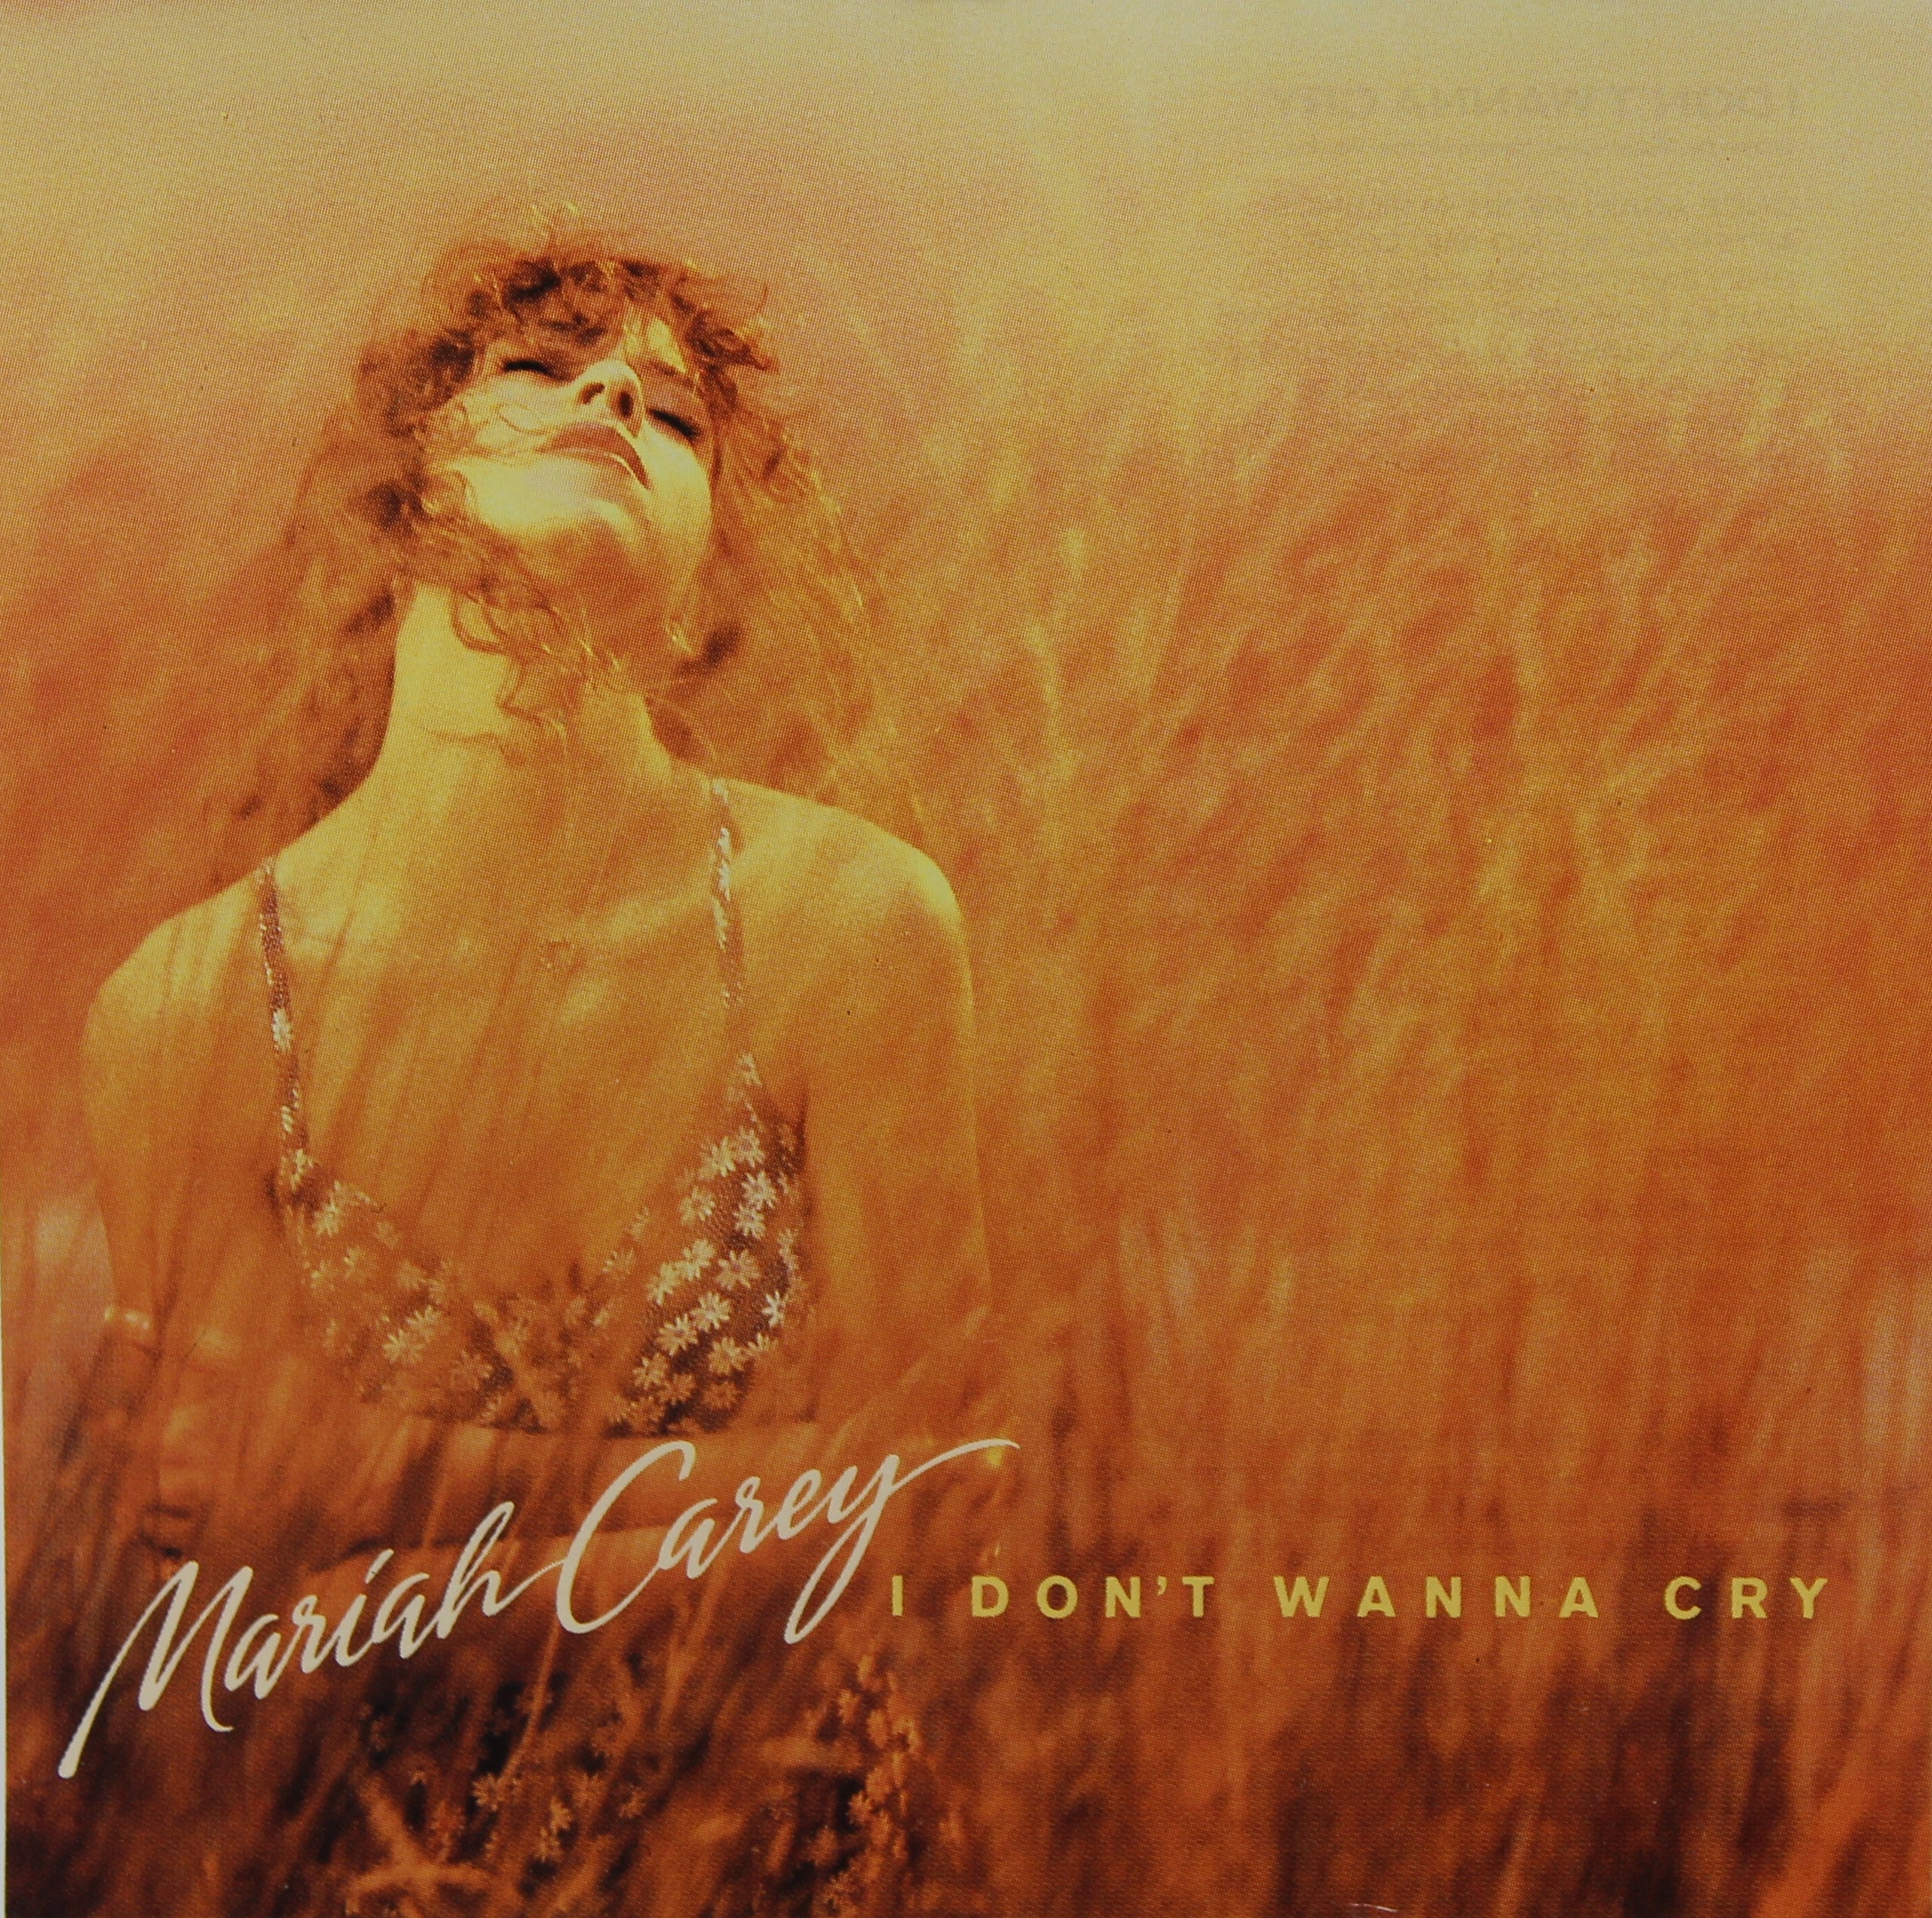 Mariah Carey, I Don't Wanna Cry, CD Single Promo, US 1991 (CD 648 